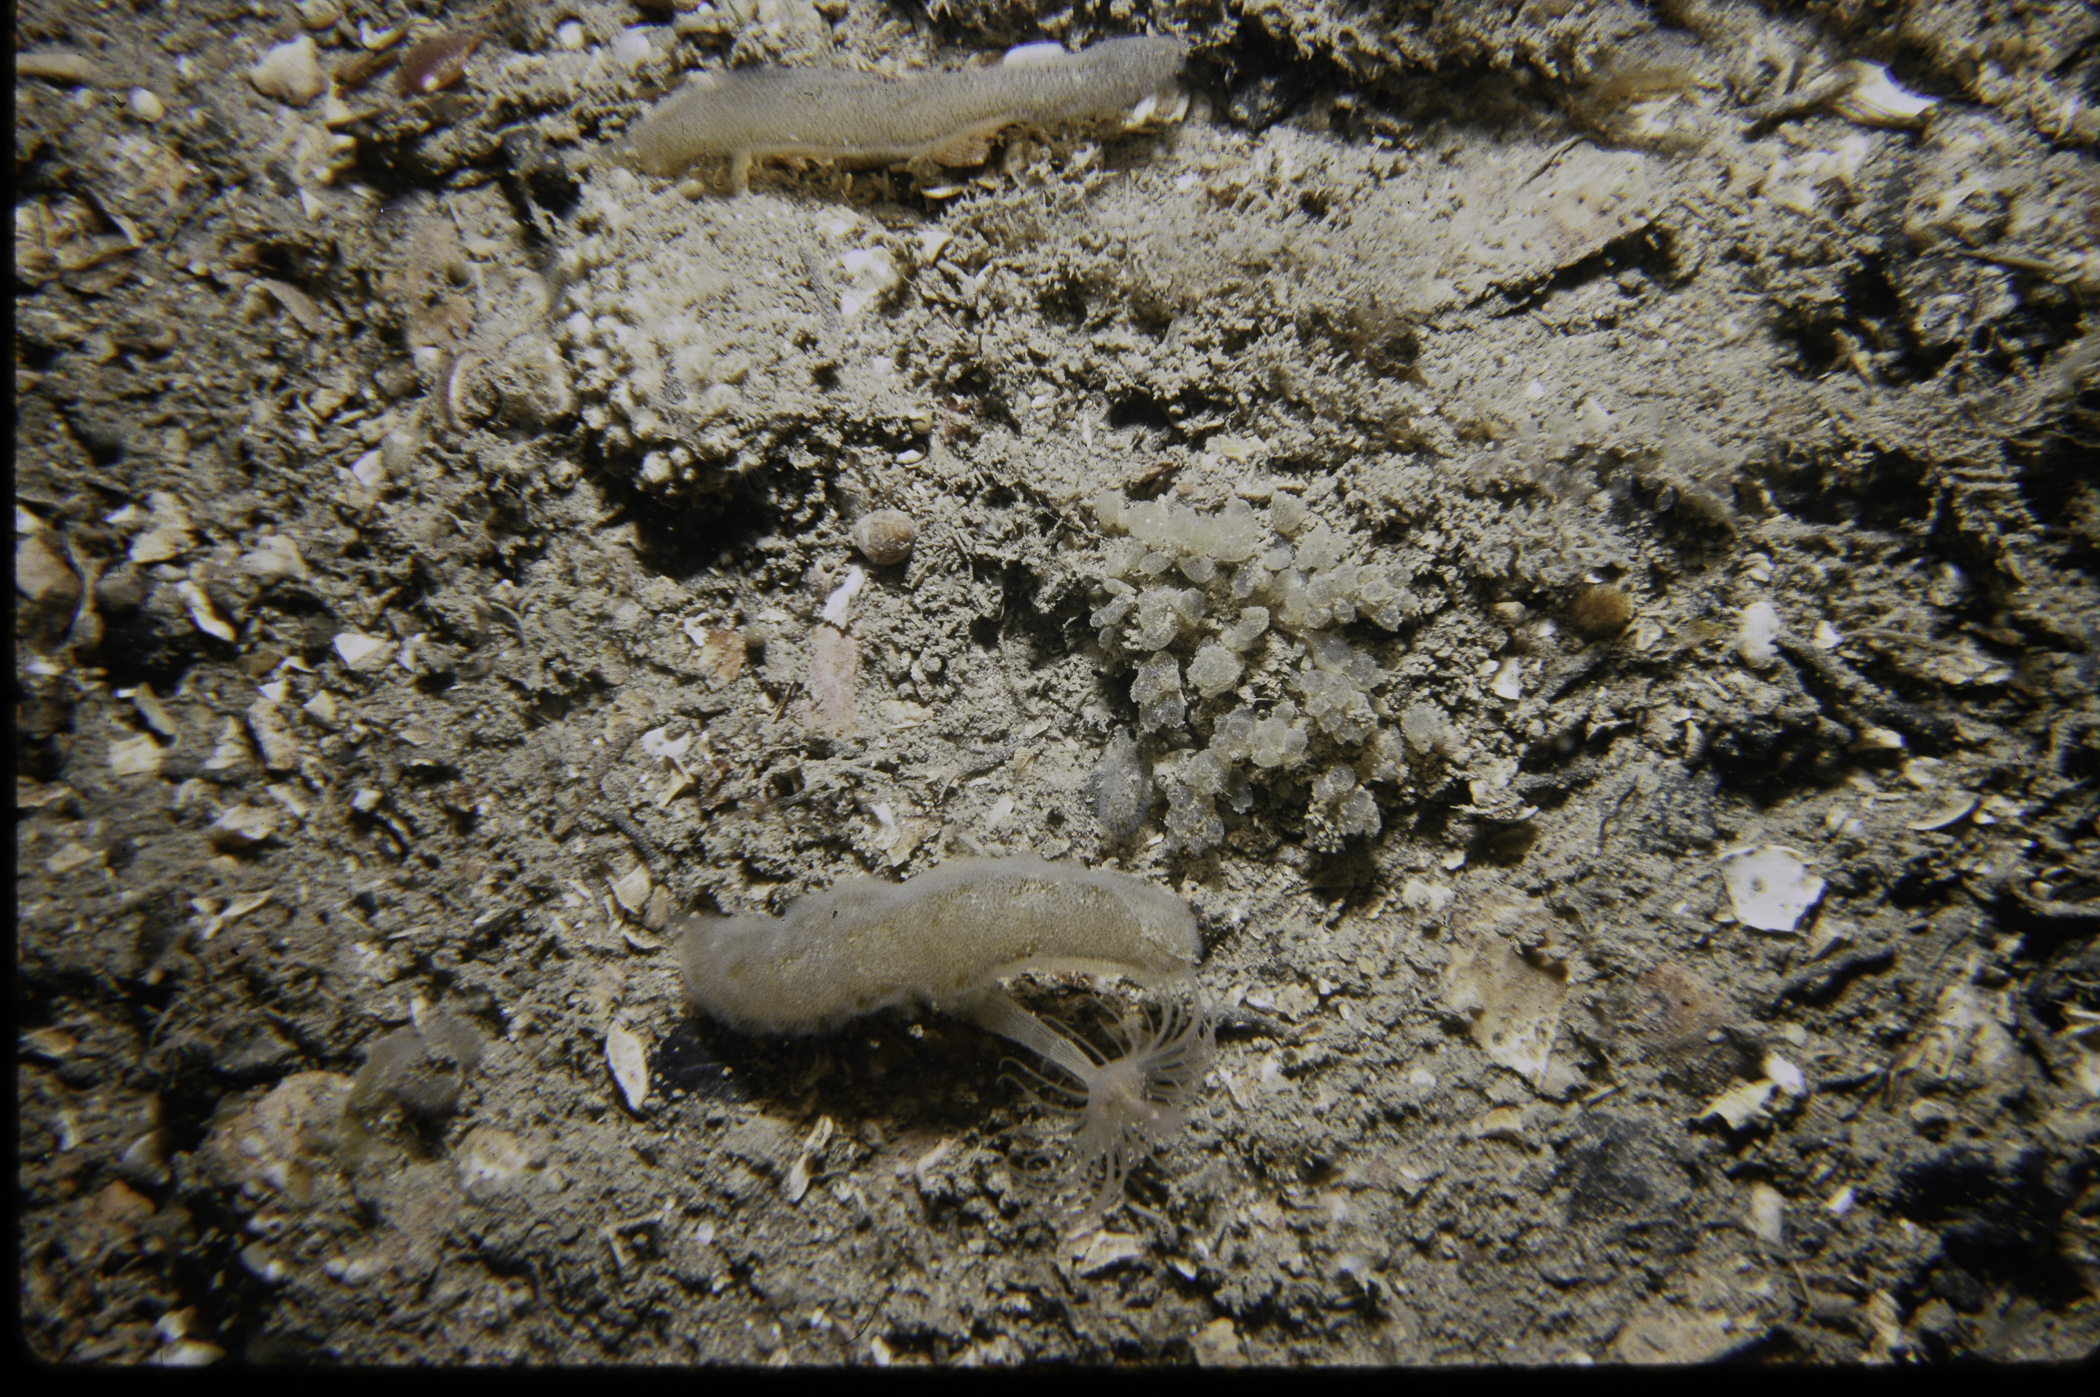 Corymorpha nutans, Alcyonidium diaphanum, Archidistoma aggregatum. Site: NE of White Cliffs, Port Muck. 